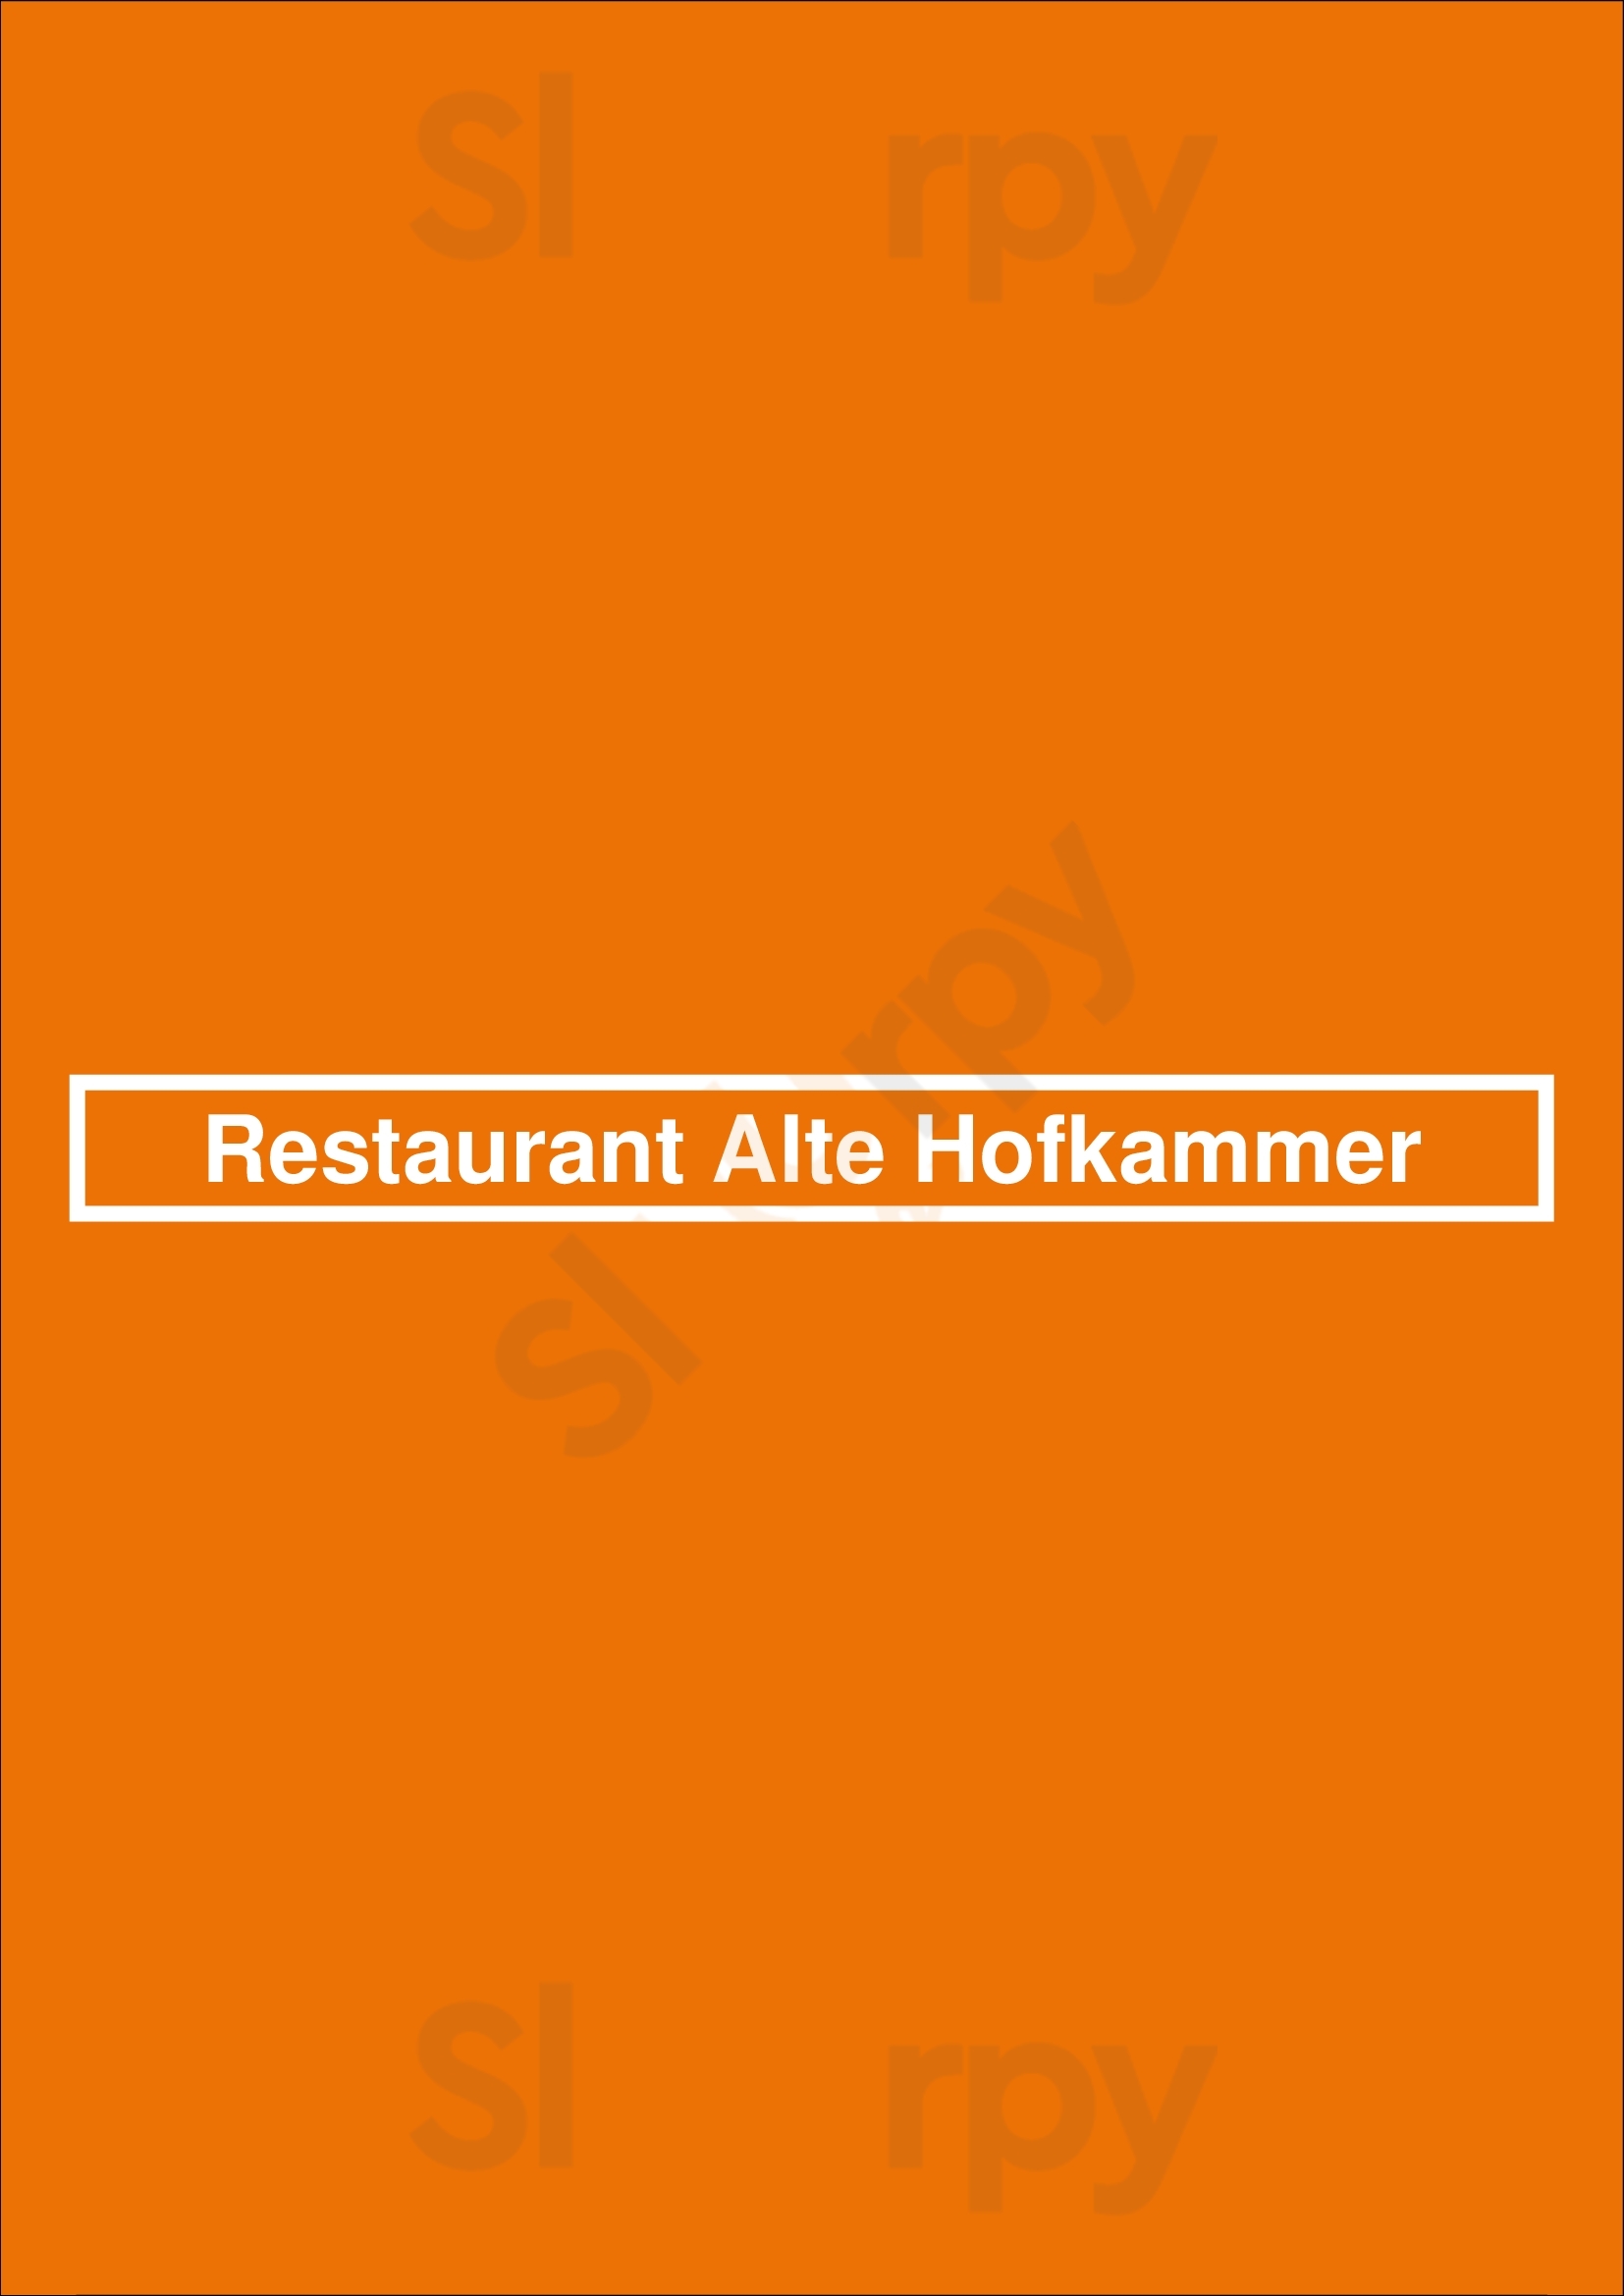 Restaurant Alte Hofkammer Stuttgart Menu - 1